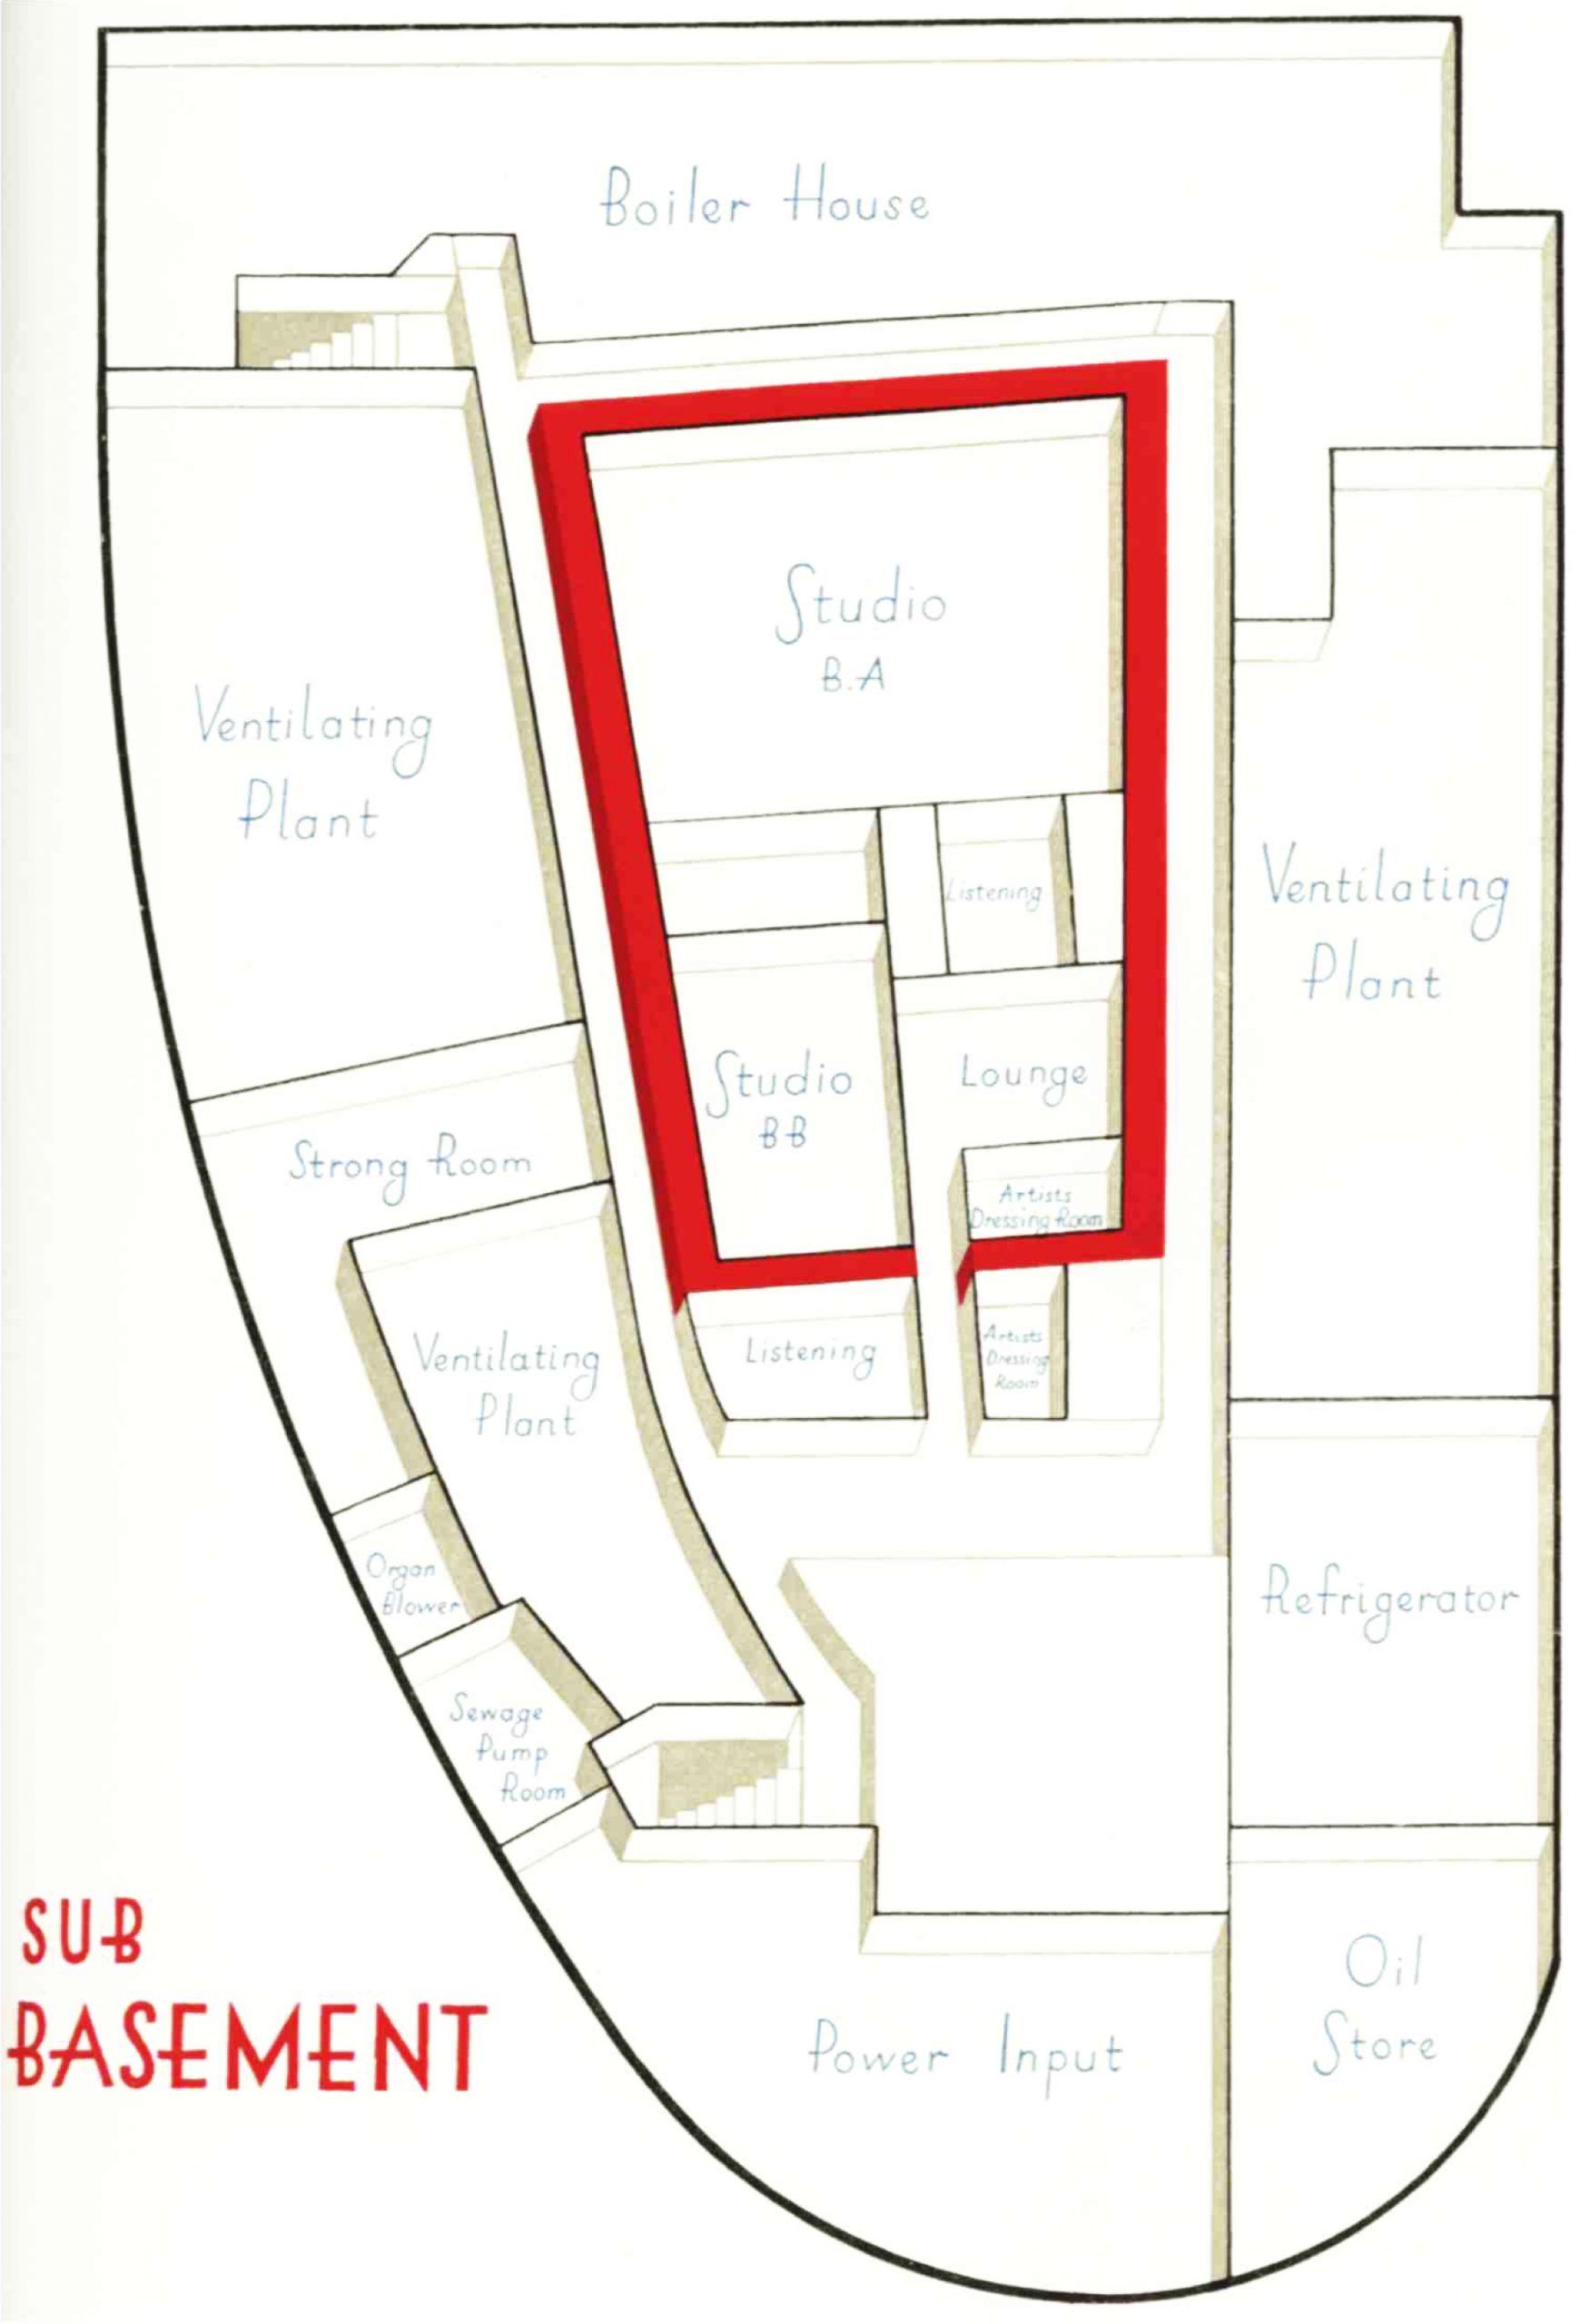 Diagram of the sub-basement